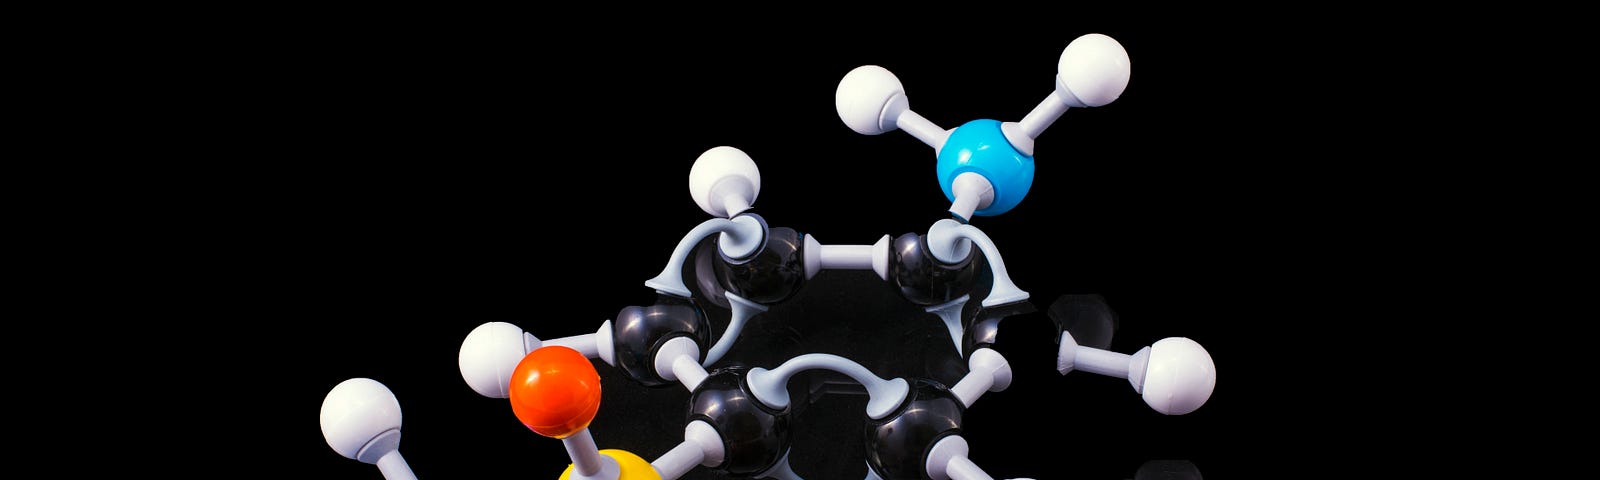 depiction of a molecule